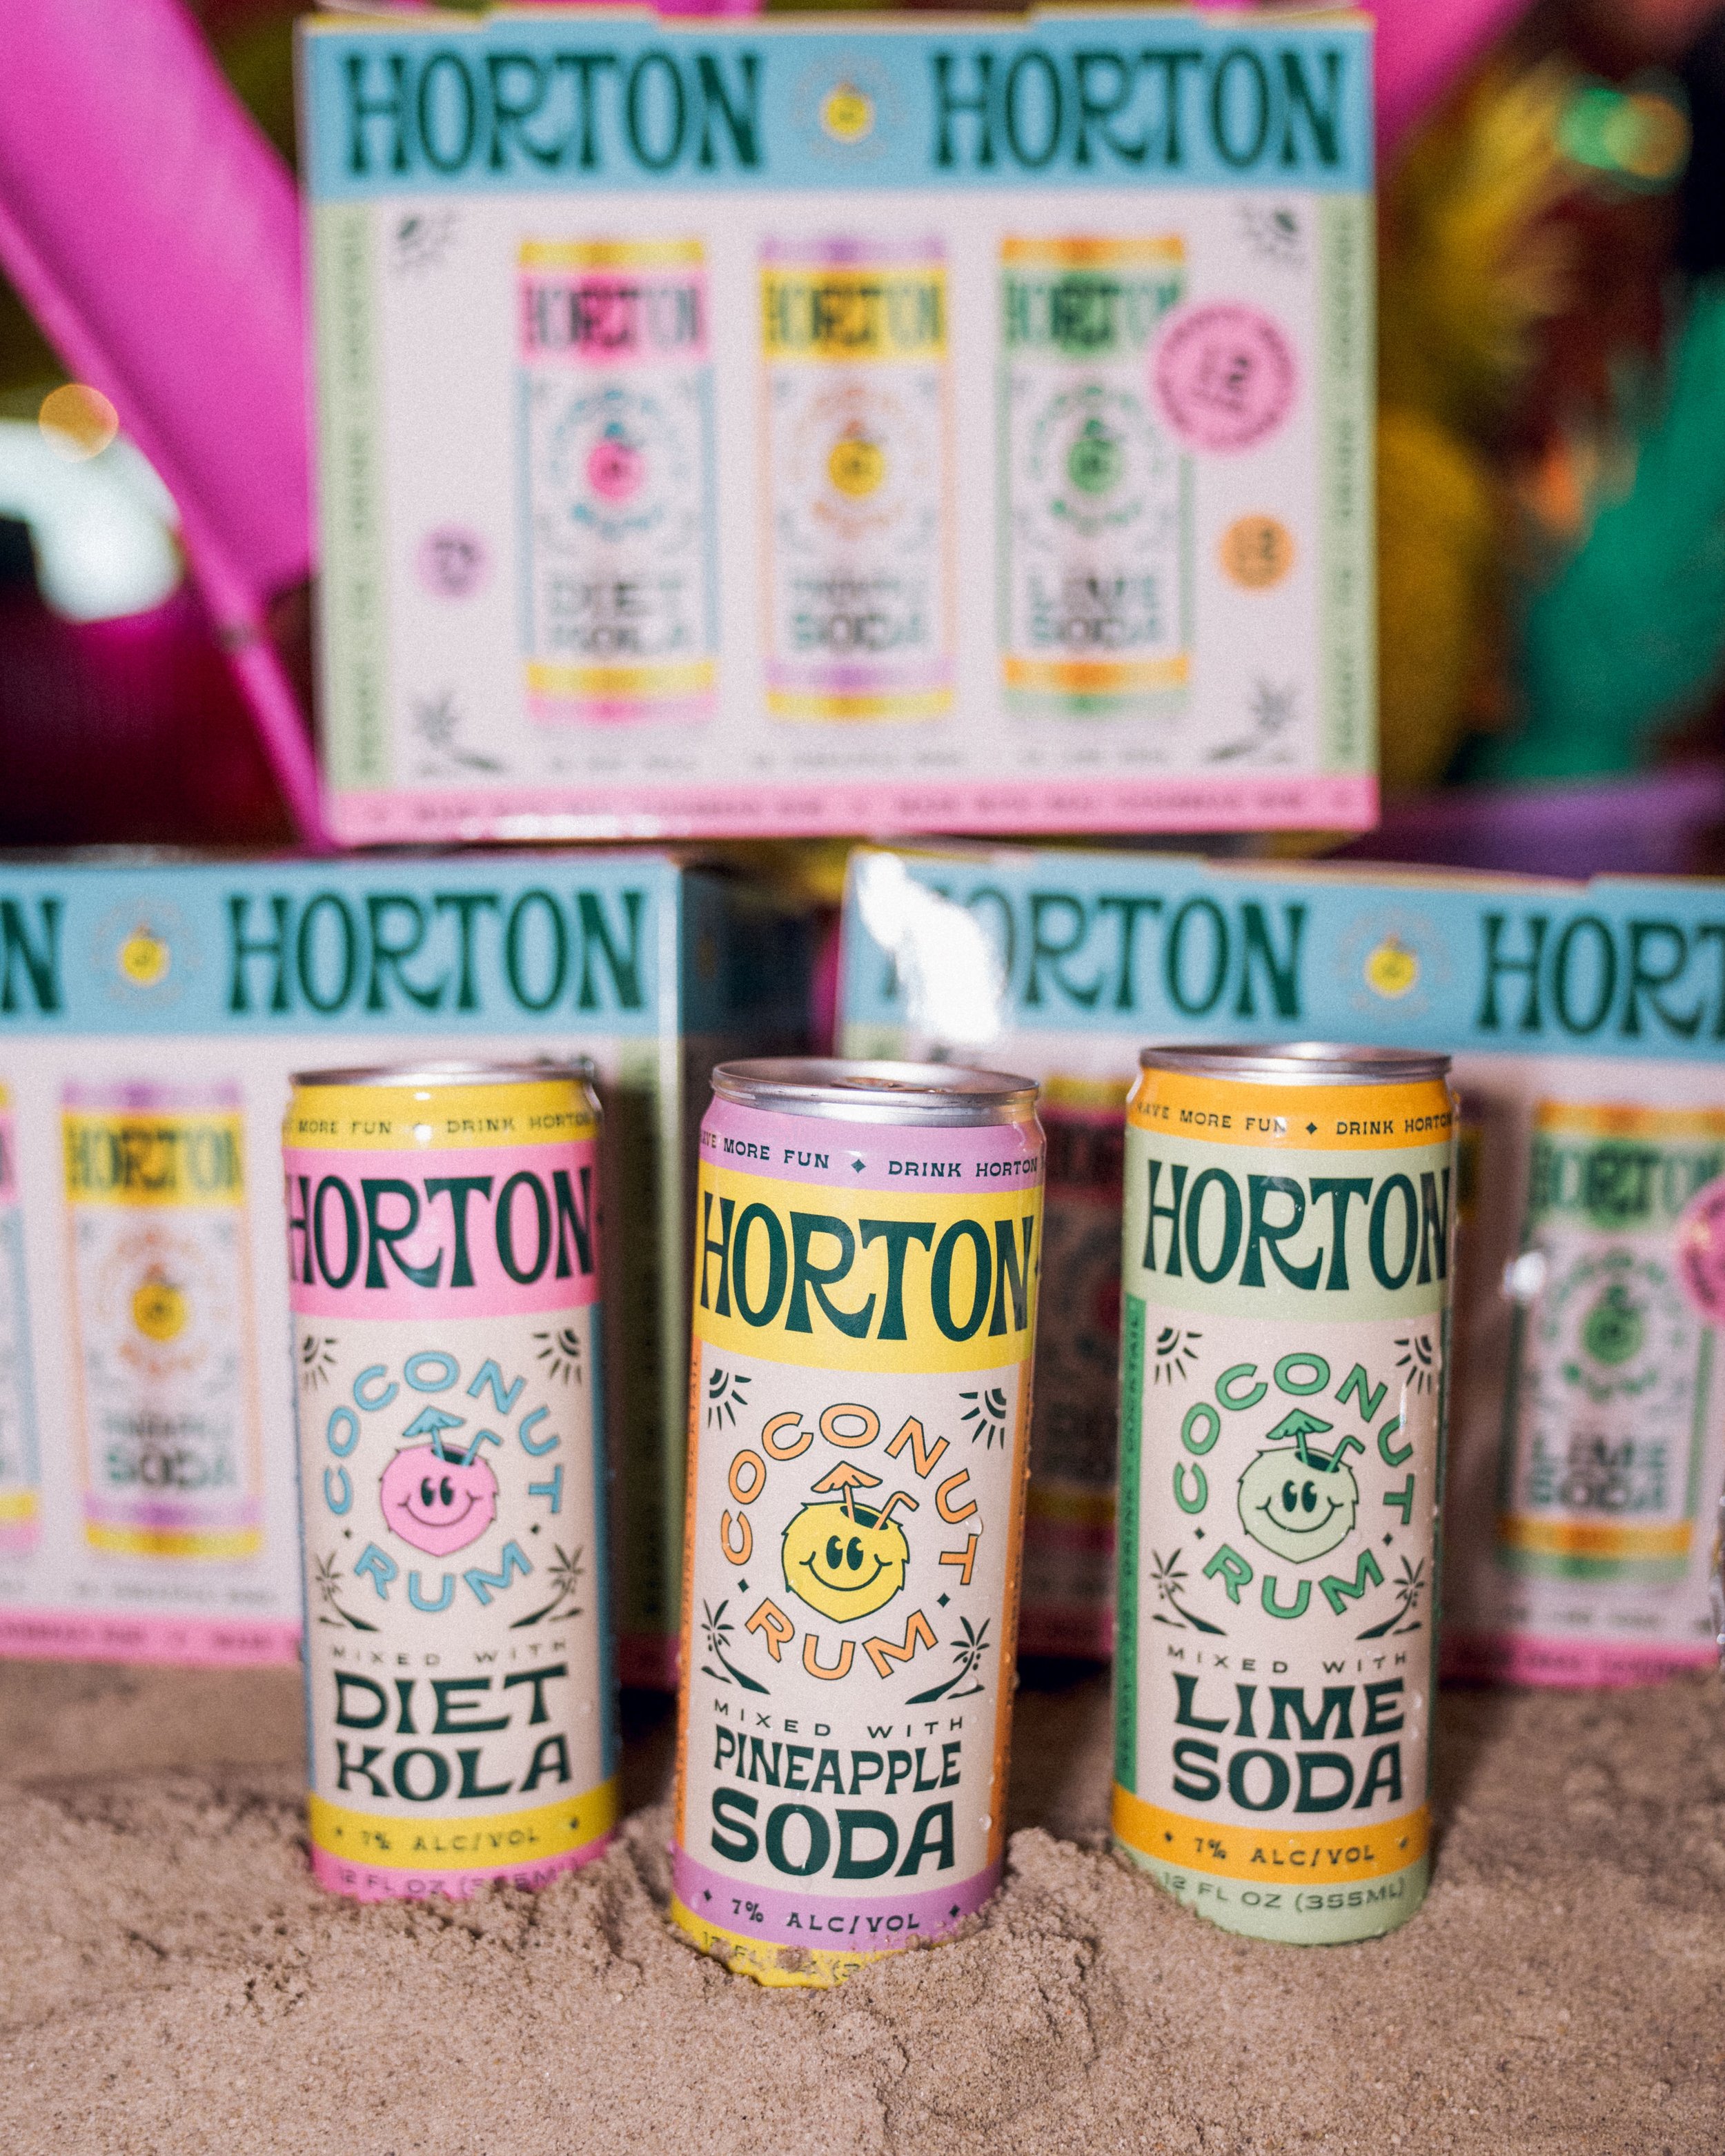 Horton Rum drinks